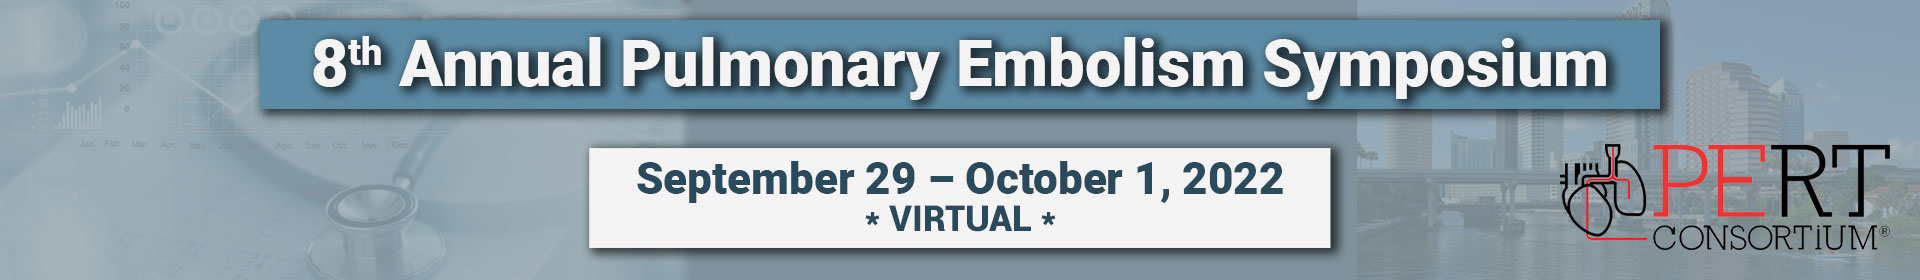 8th Annual Pulmonary Embolism Symposium Event Banner